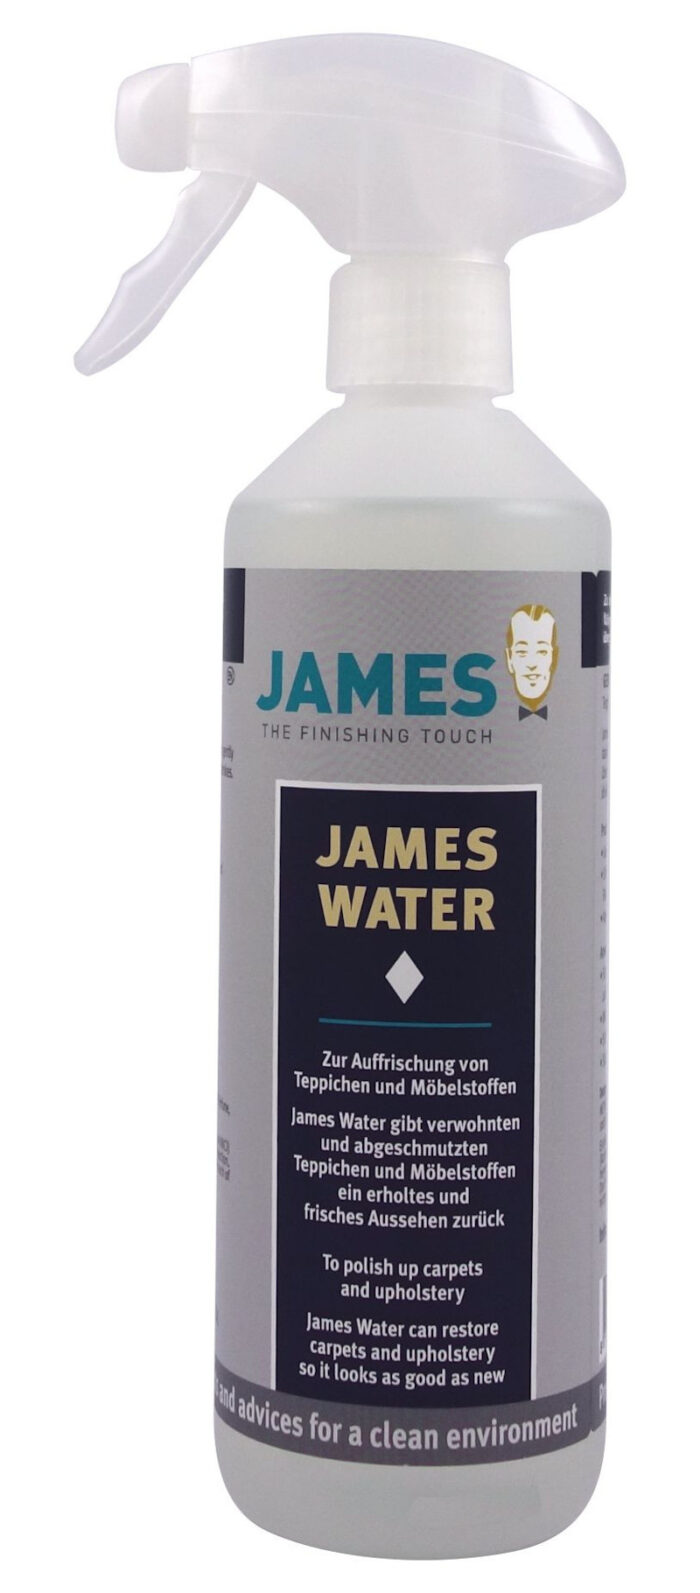 Flacone JAMES Water